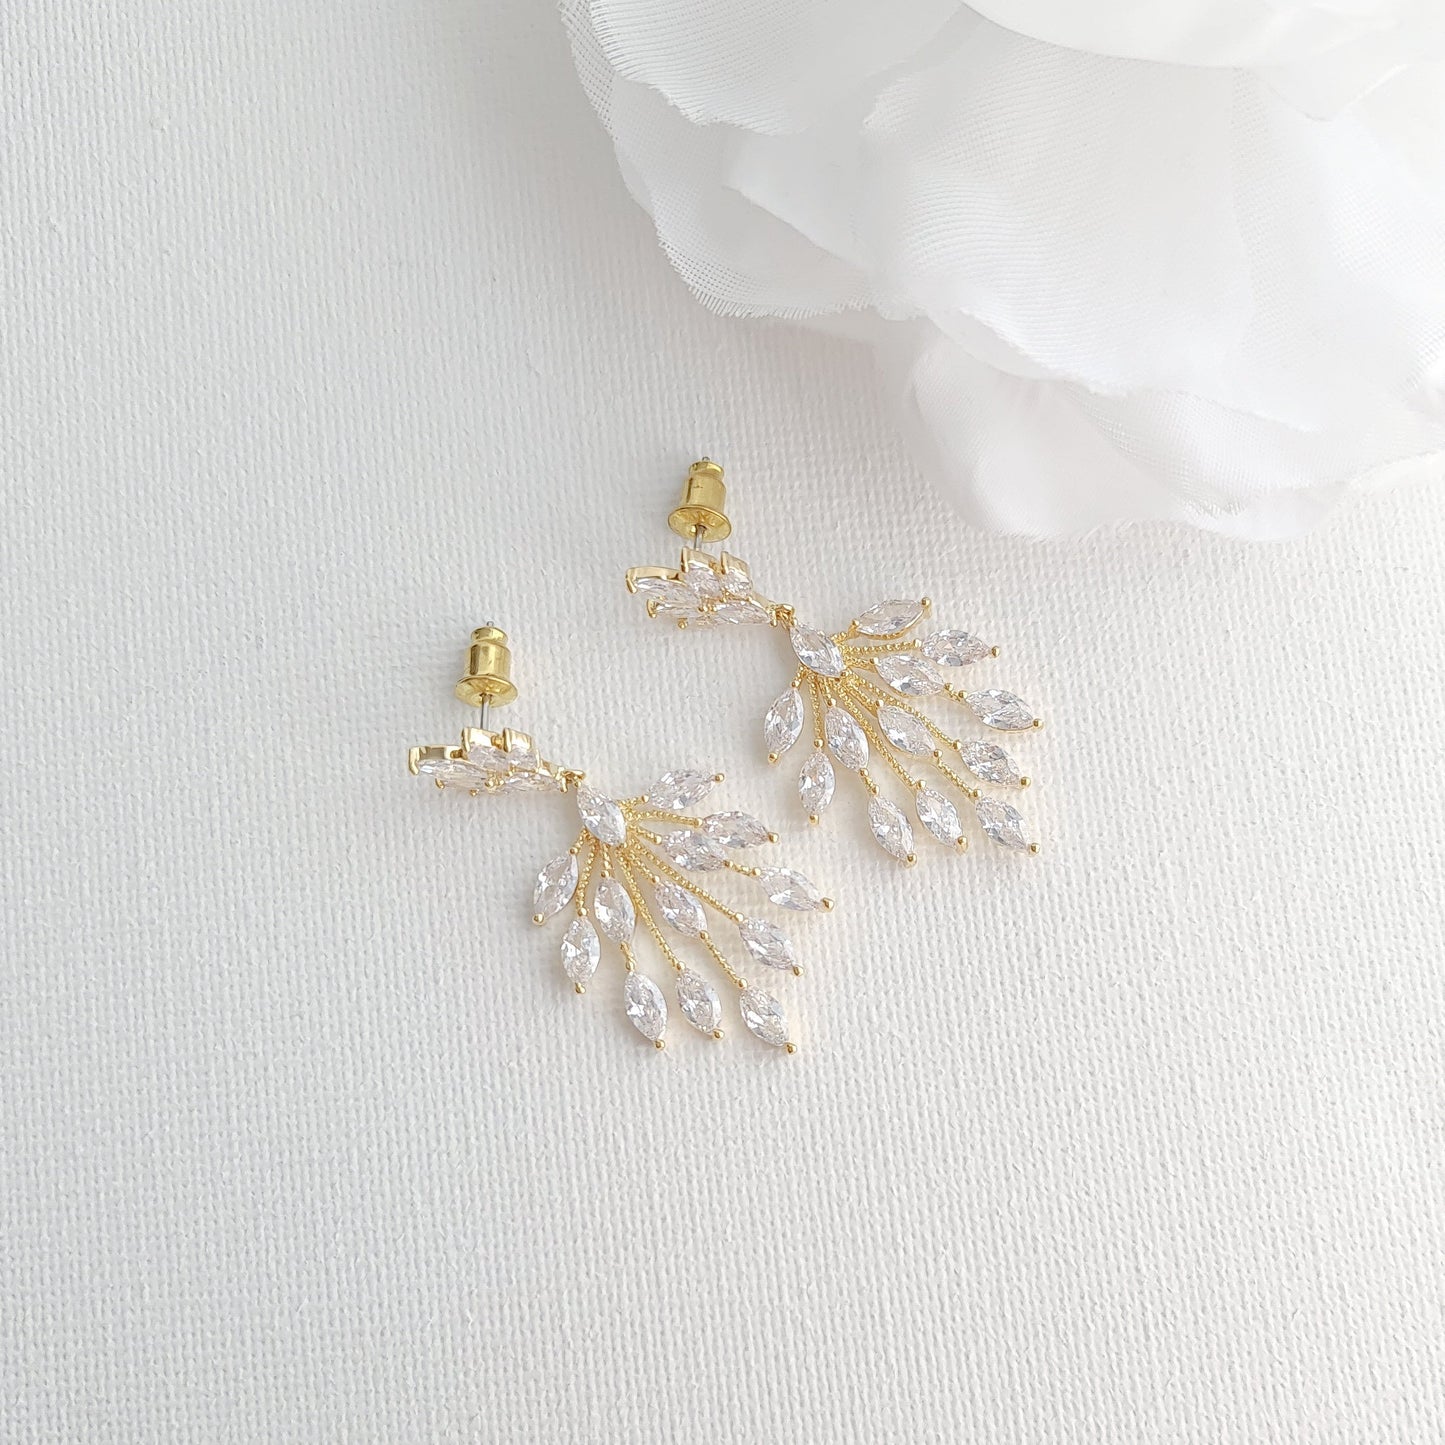 Tiny Leaf Chandelier Earrings in Gold For Brides-Belle